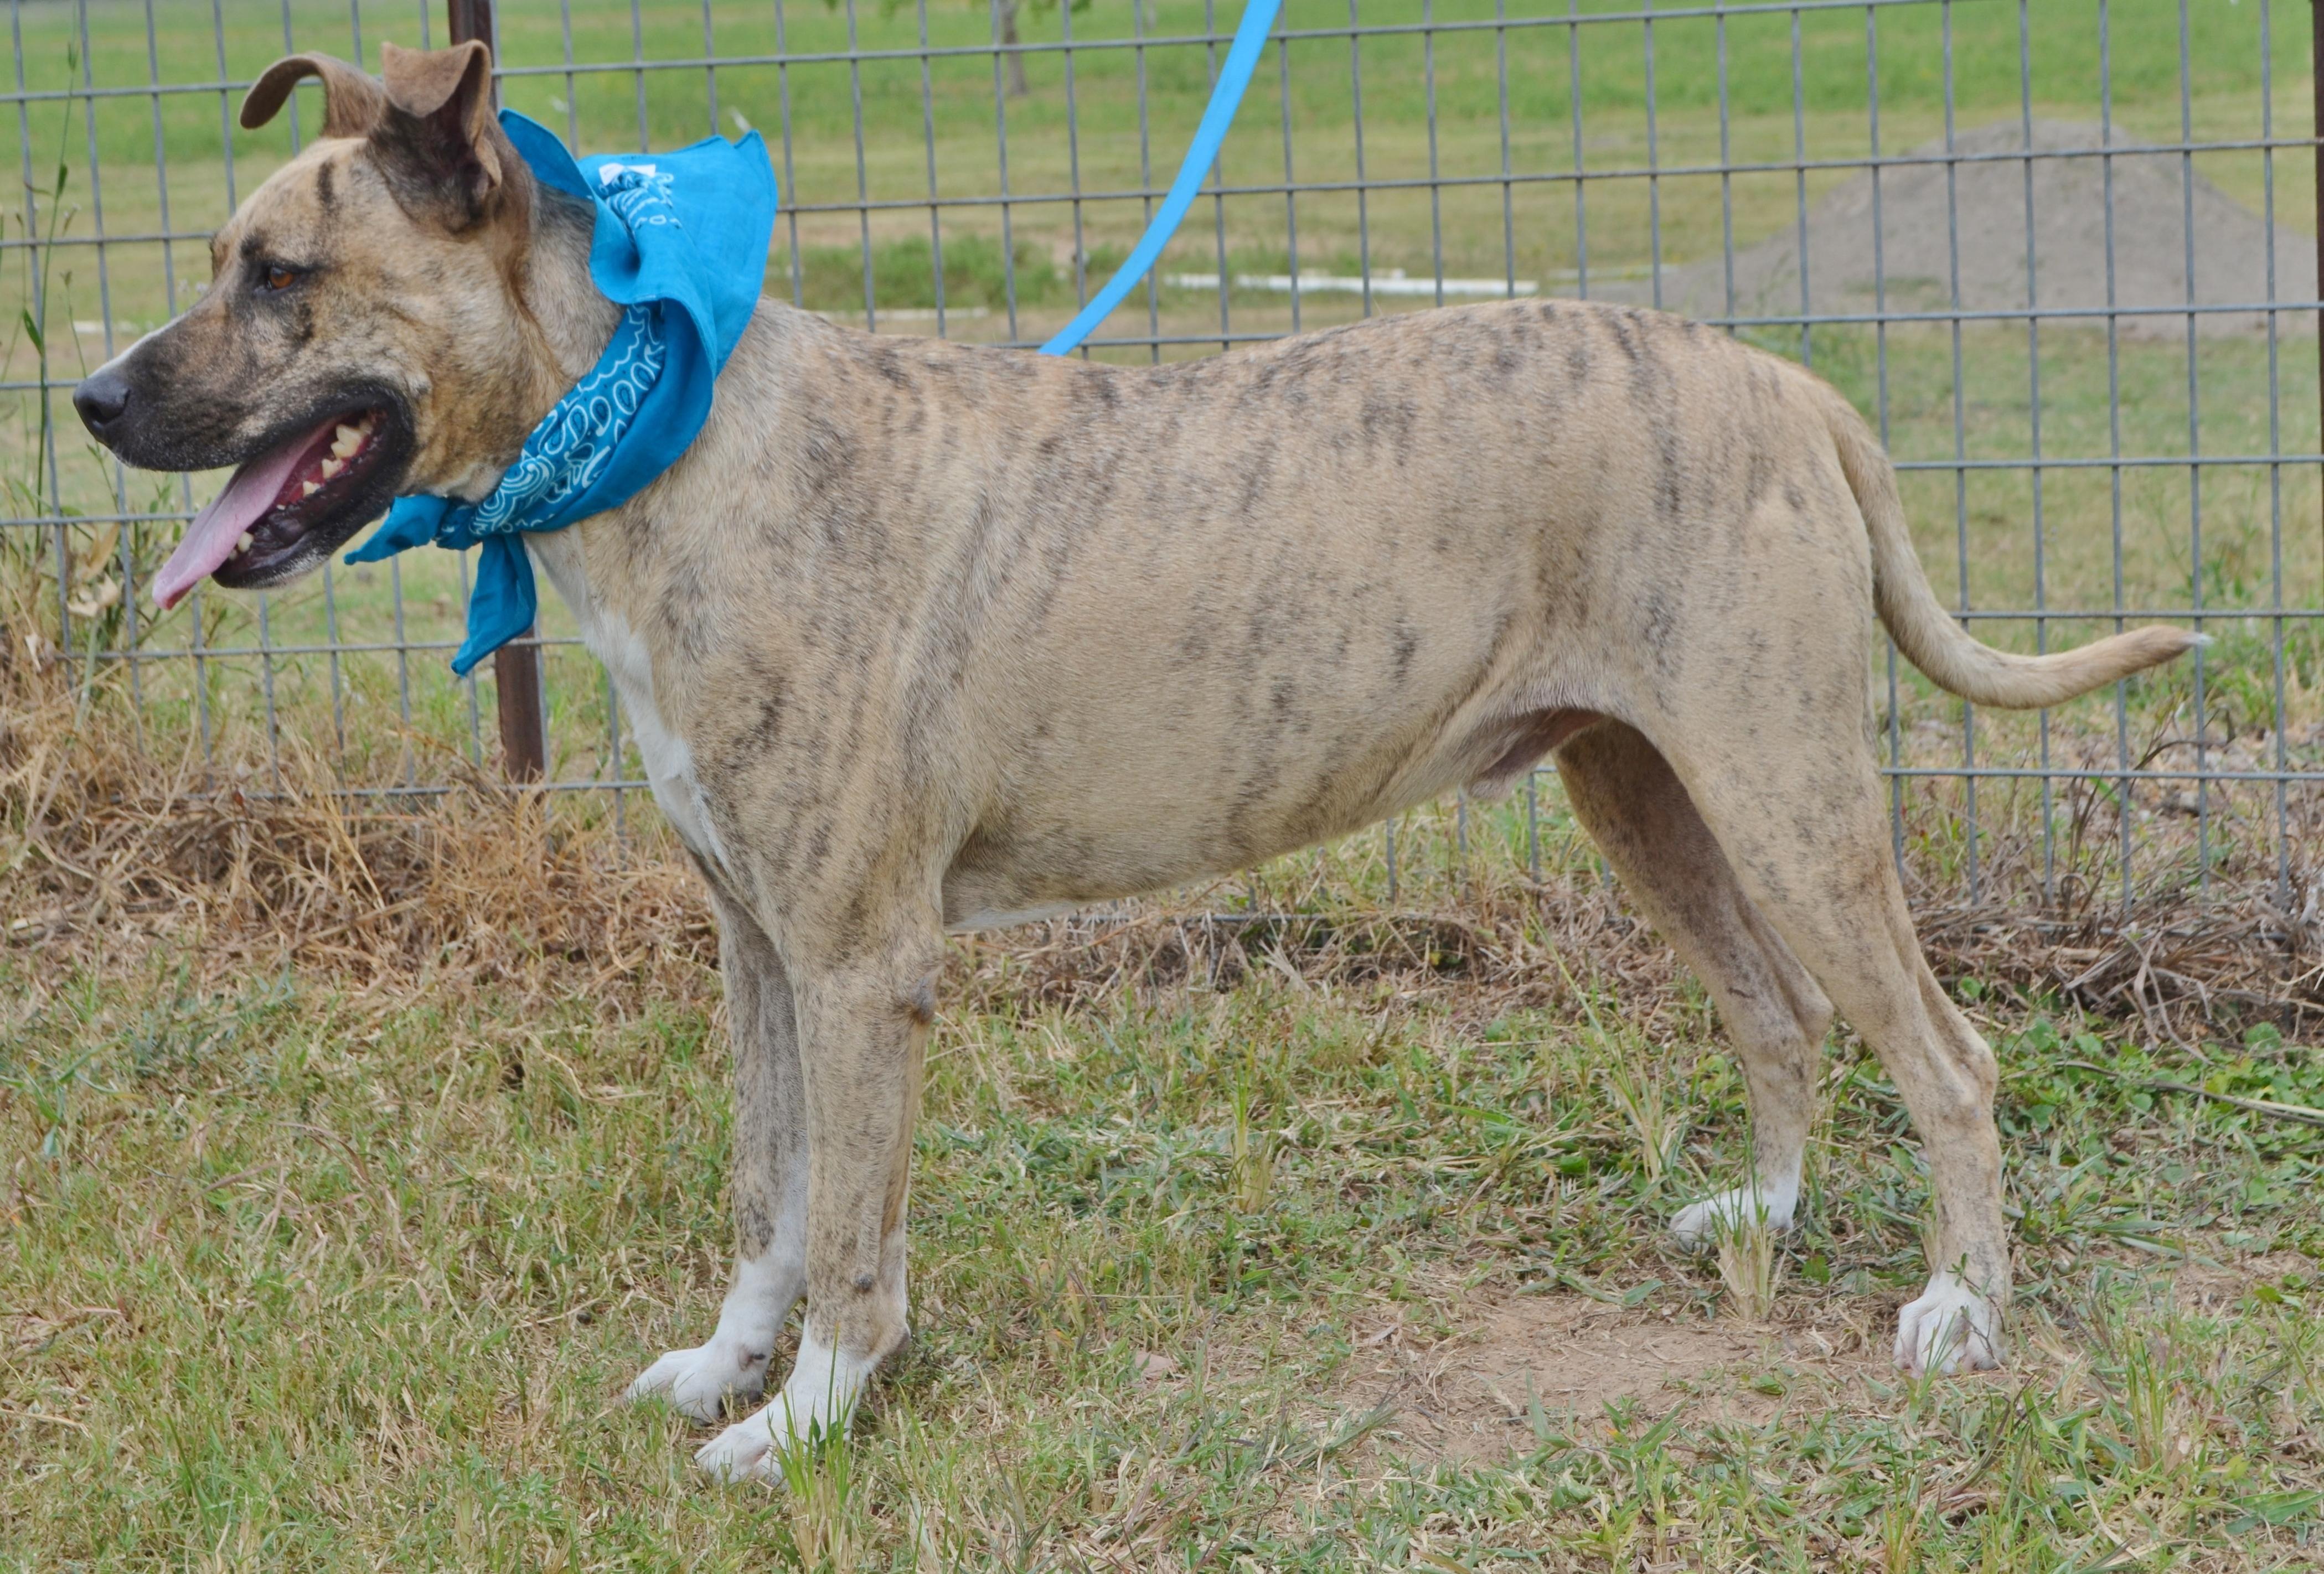 LANCE-GOOD BOY, an adoptable Pit Bull Terrier in Danbury, TX, 77534 | Photo Image 3